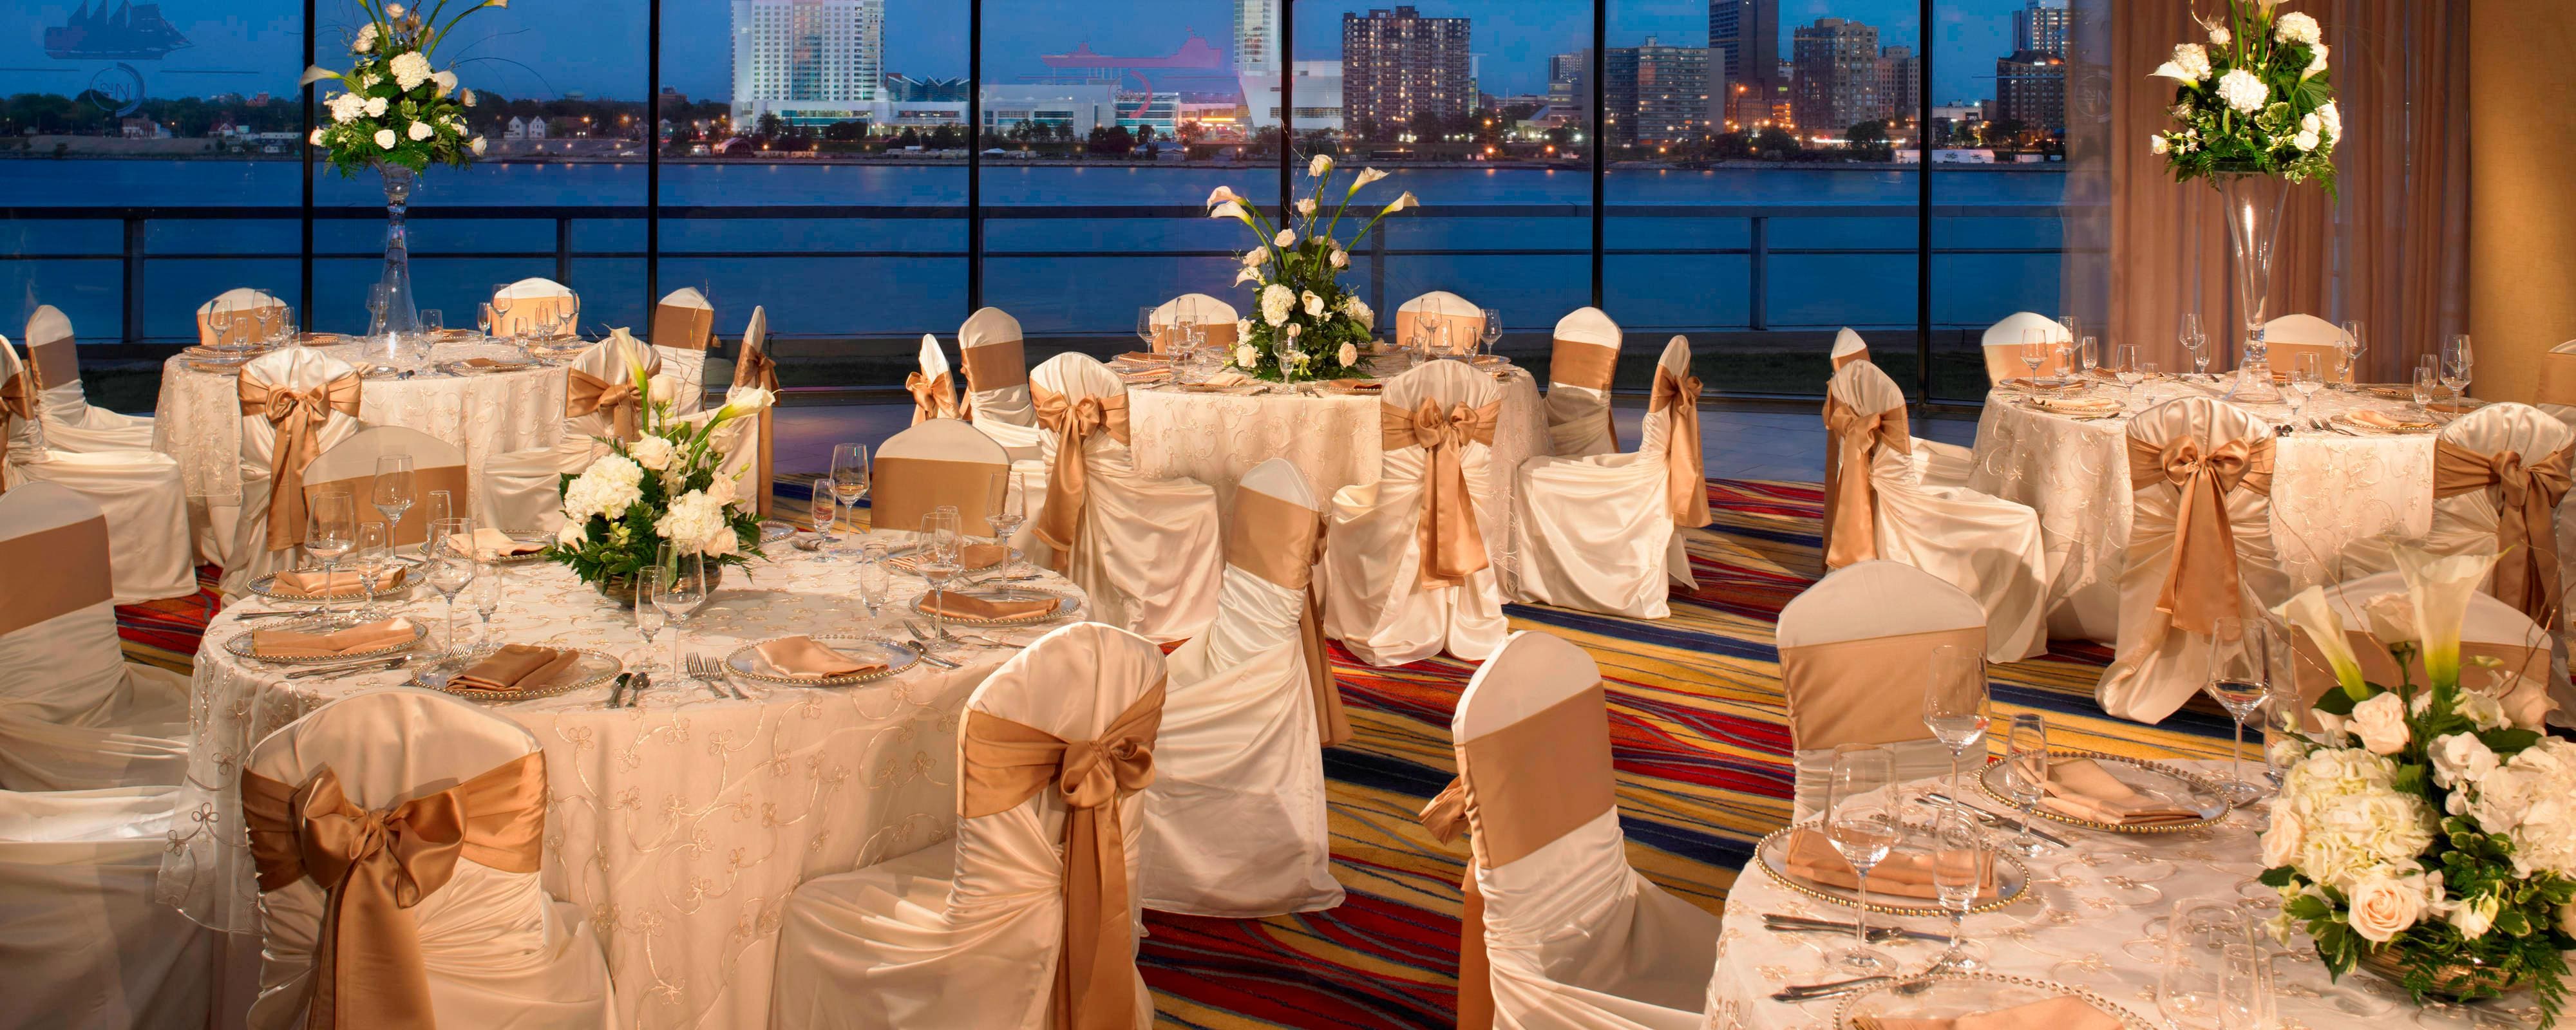 Detroit Michigan Wedding Venues | Detroit Marriott at the Renaissance